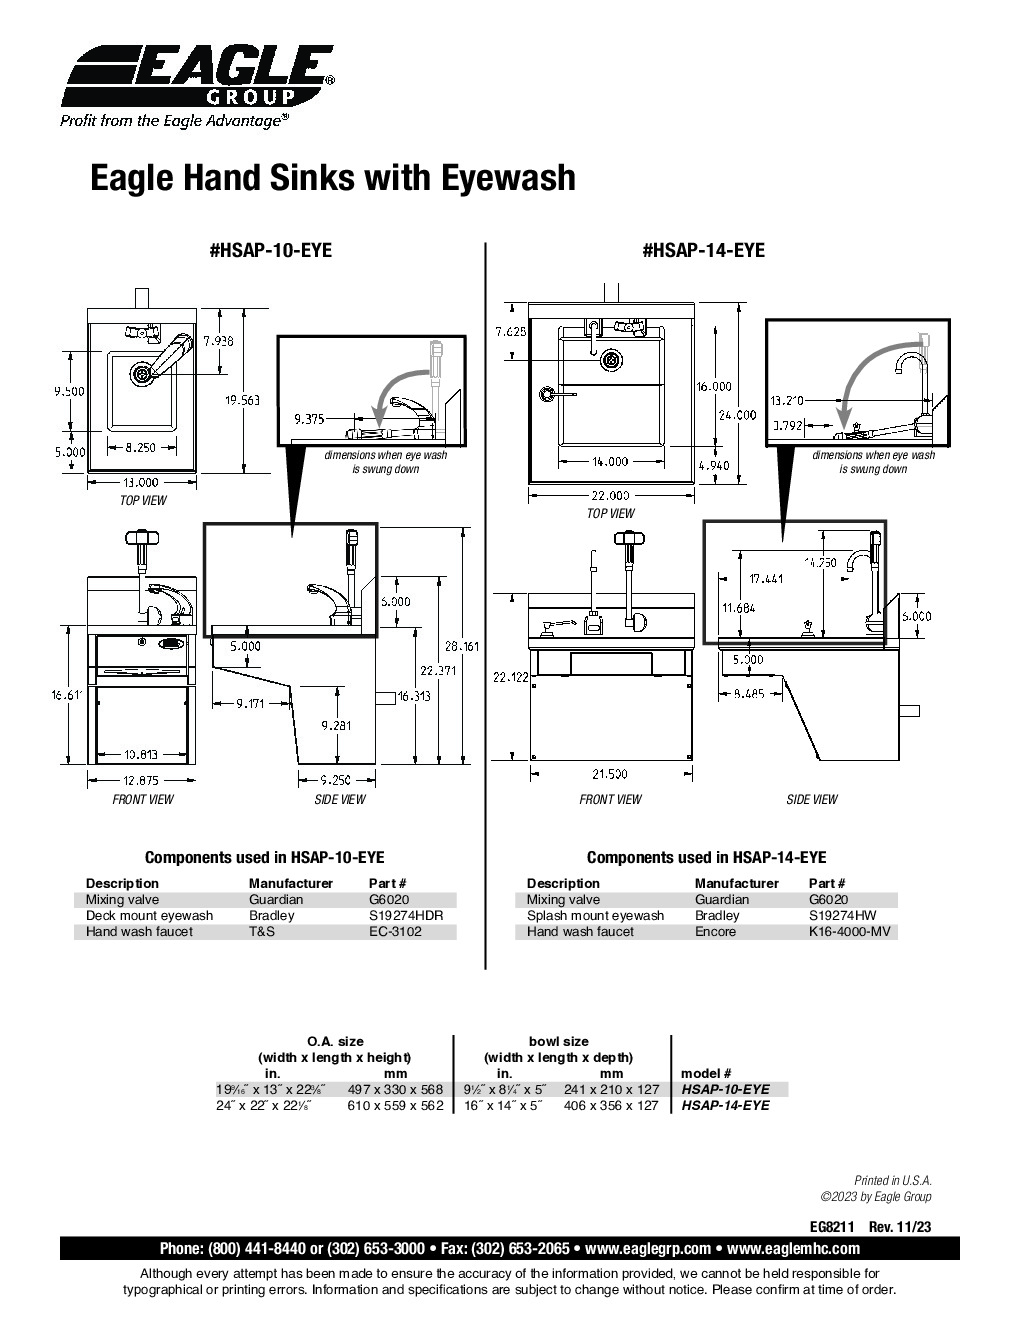 Eagle Group HSAP-14-EYE Hand Sink